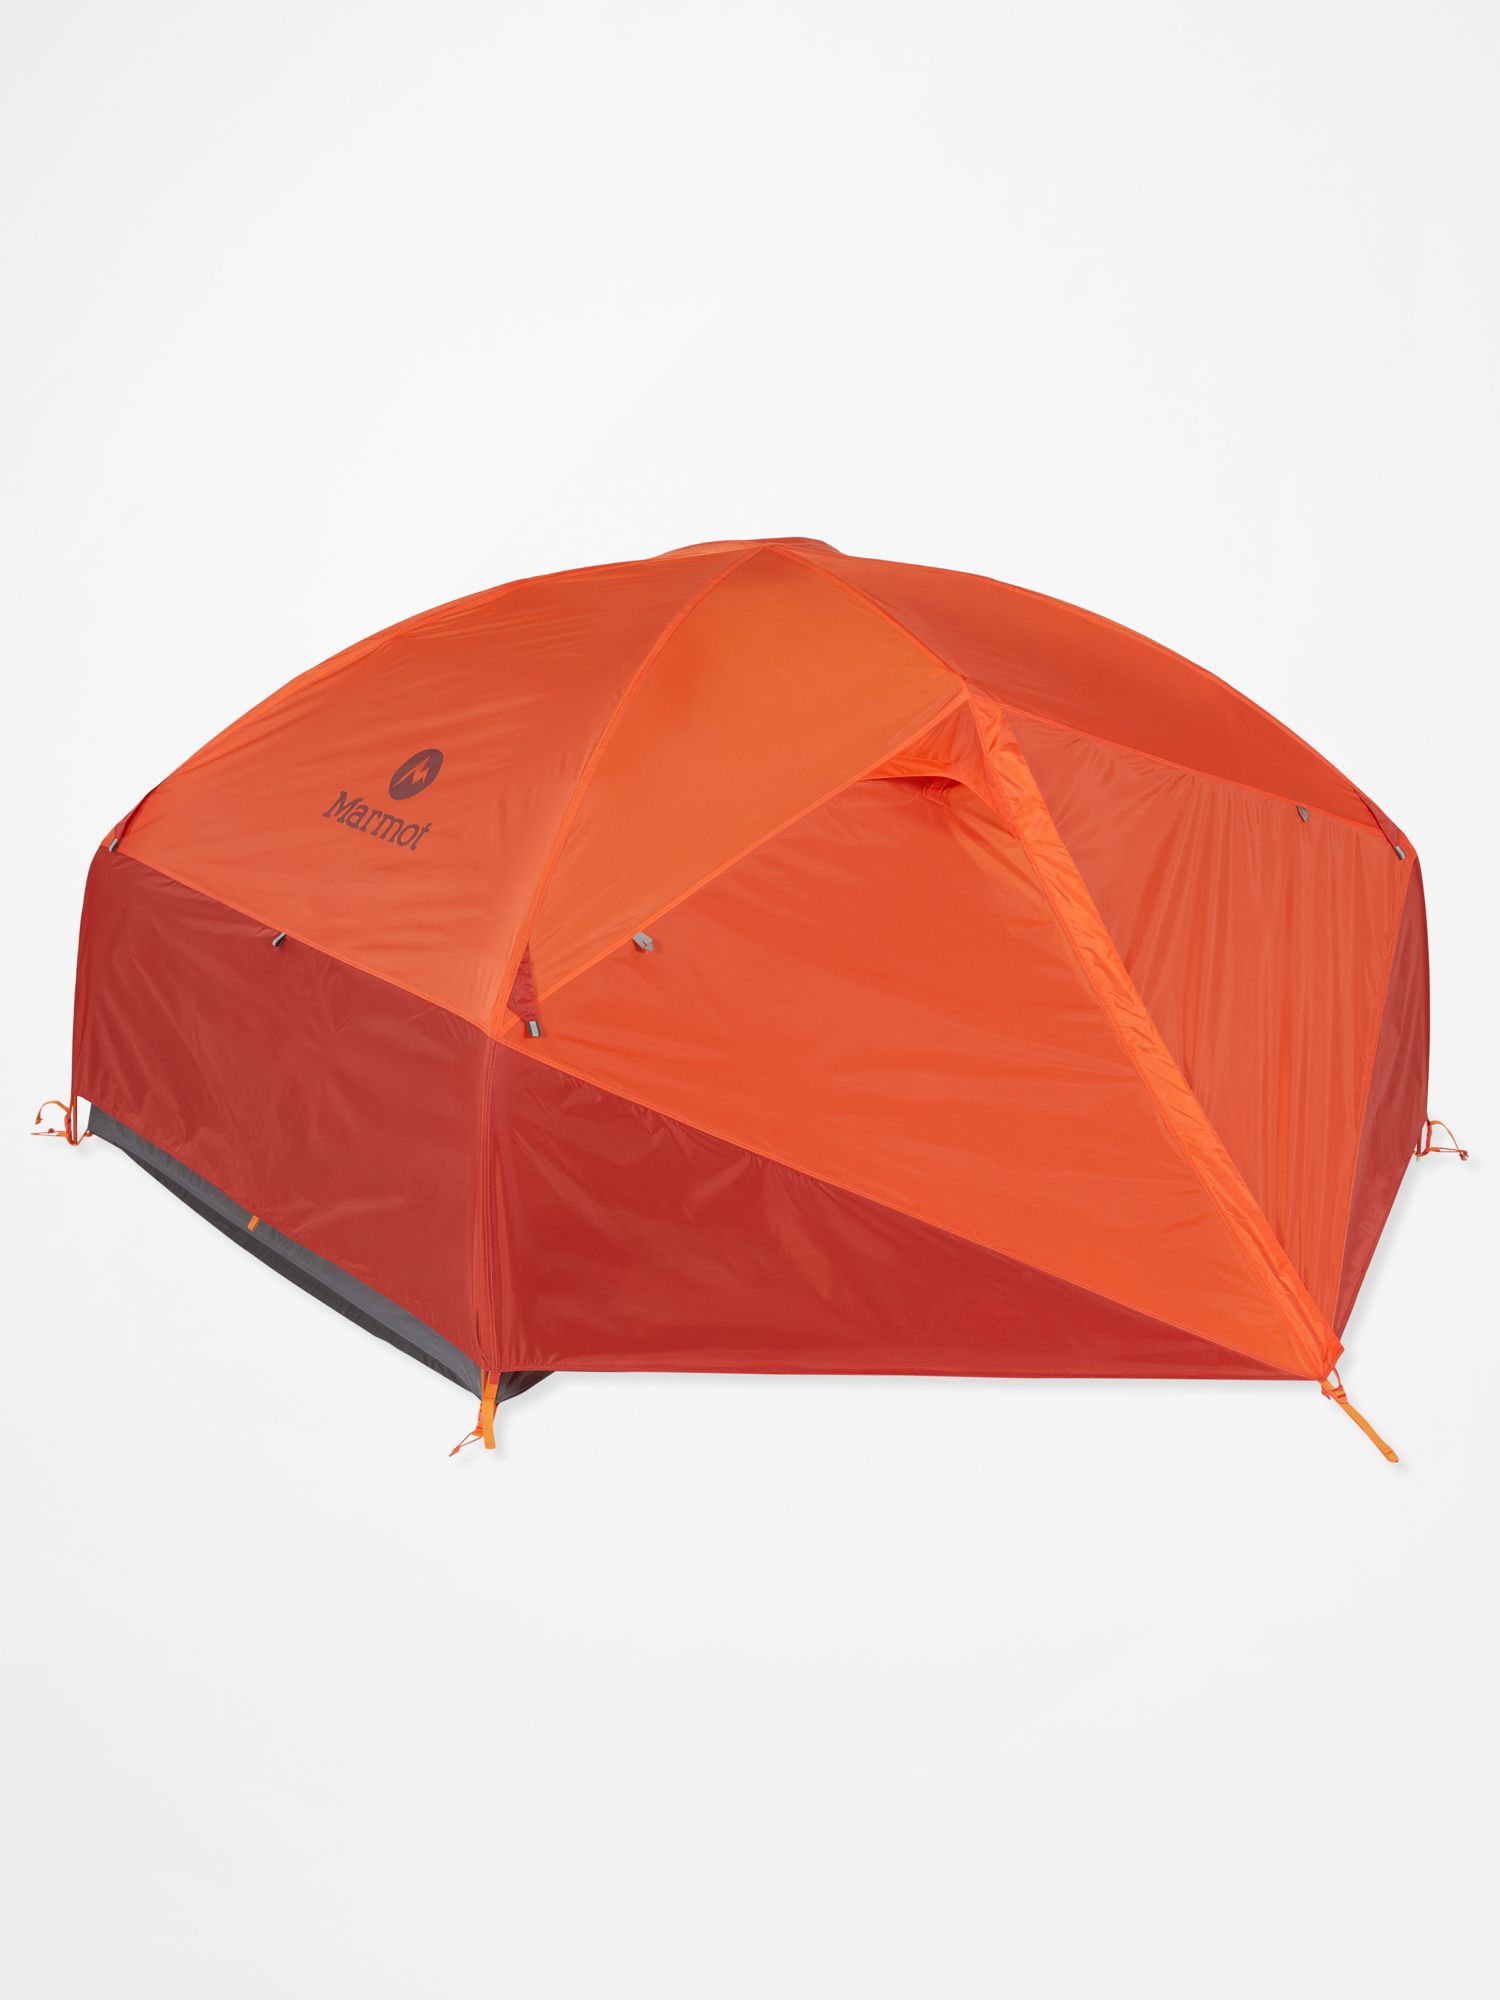 Limelight 3-Person Tent | Marmot